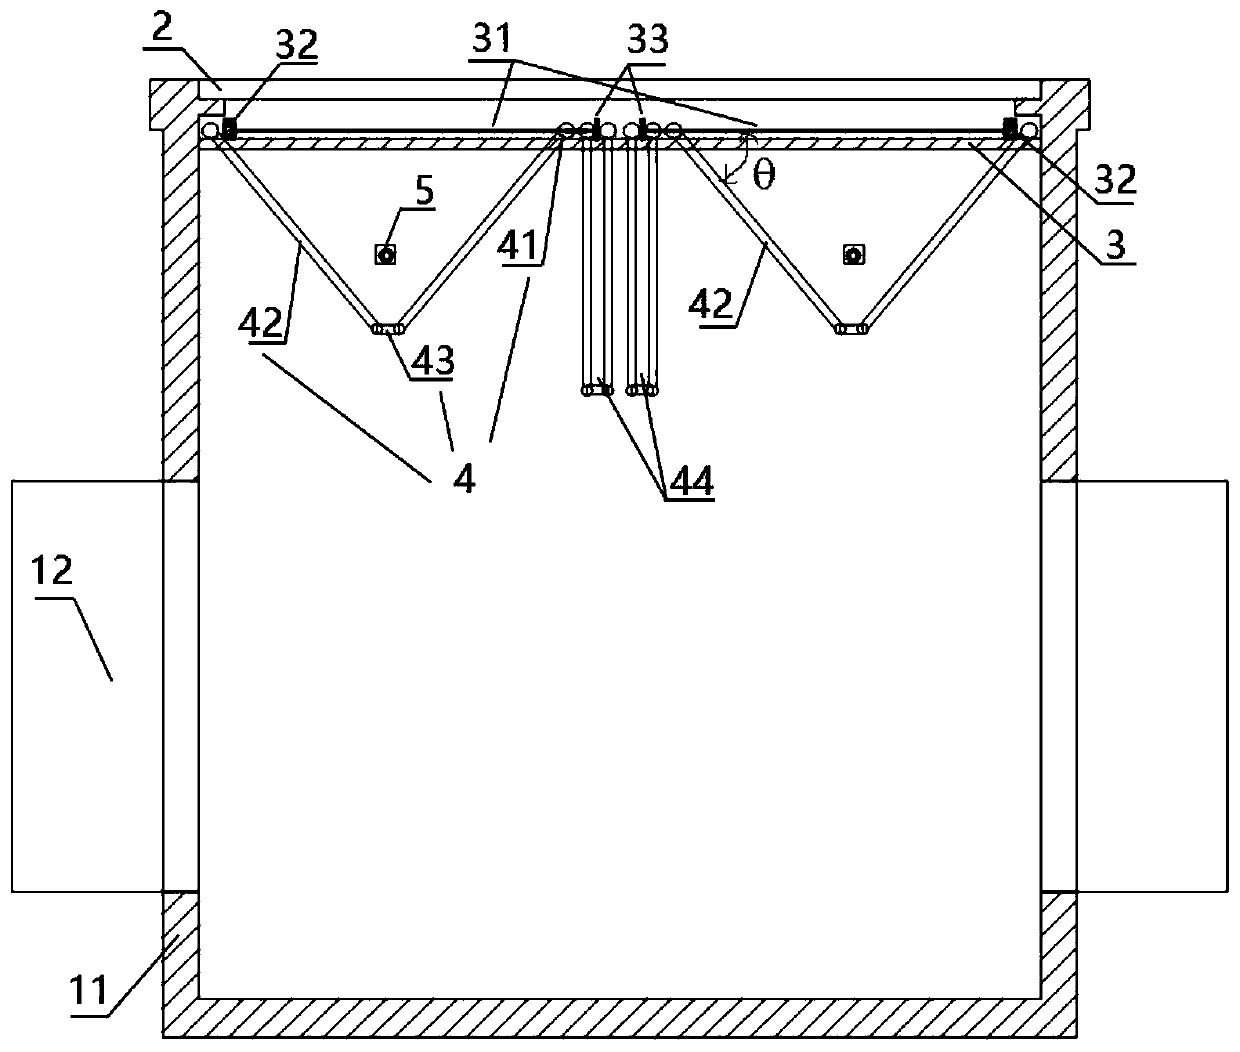 Intelligent flat grate type catch basin based on V-shaped filter structure